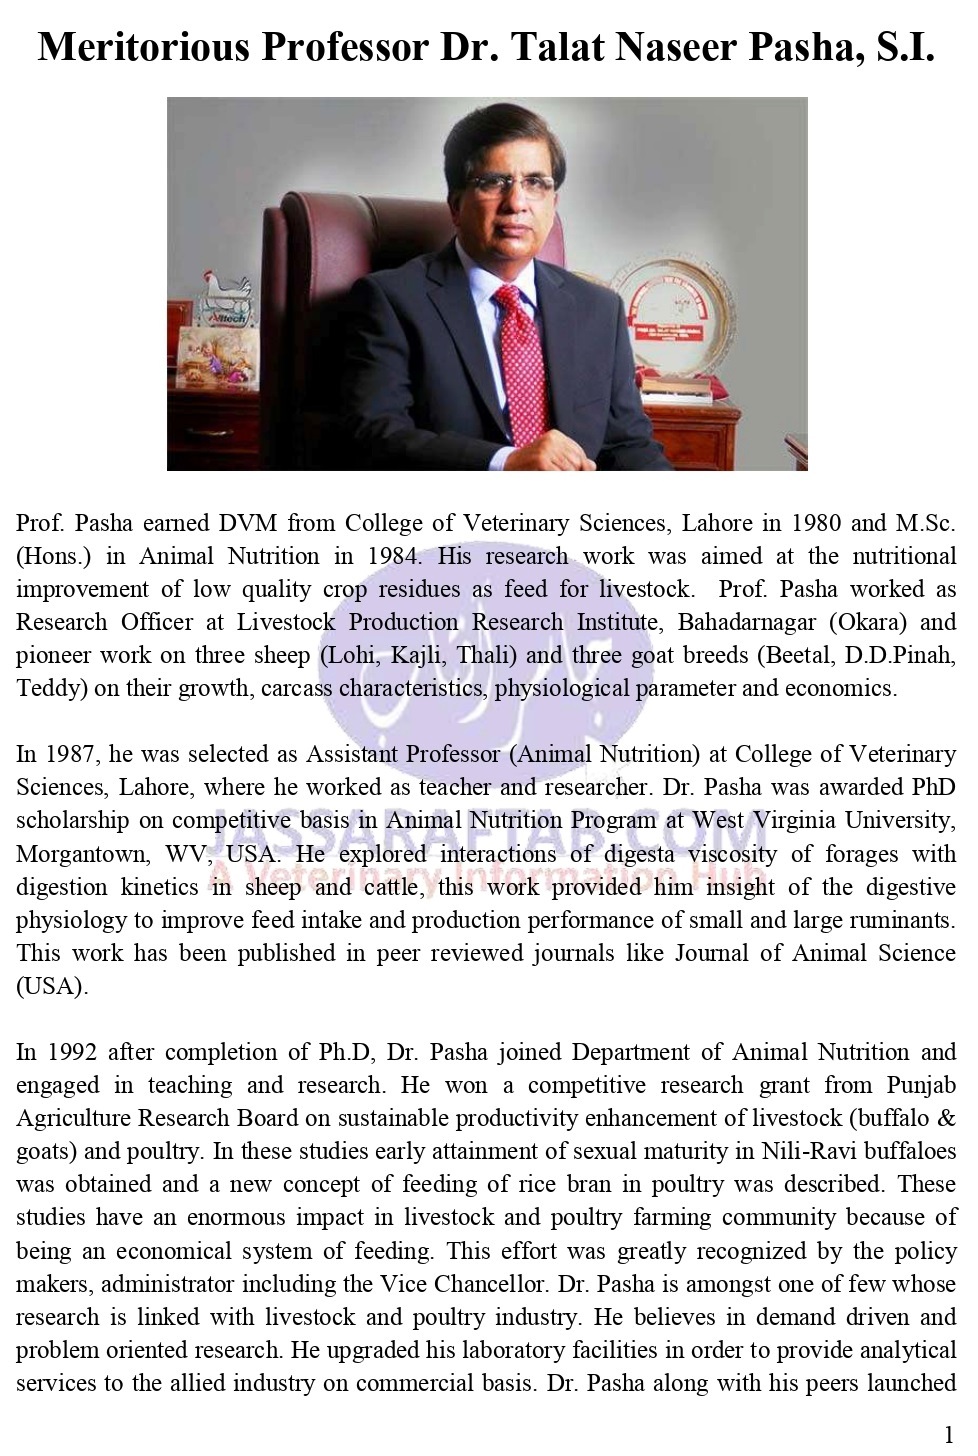 Professional Life and Achievements - Profile of Prof. Talat Naseer Pasha 